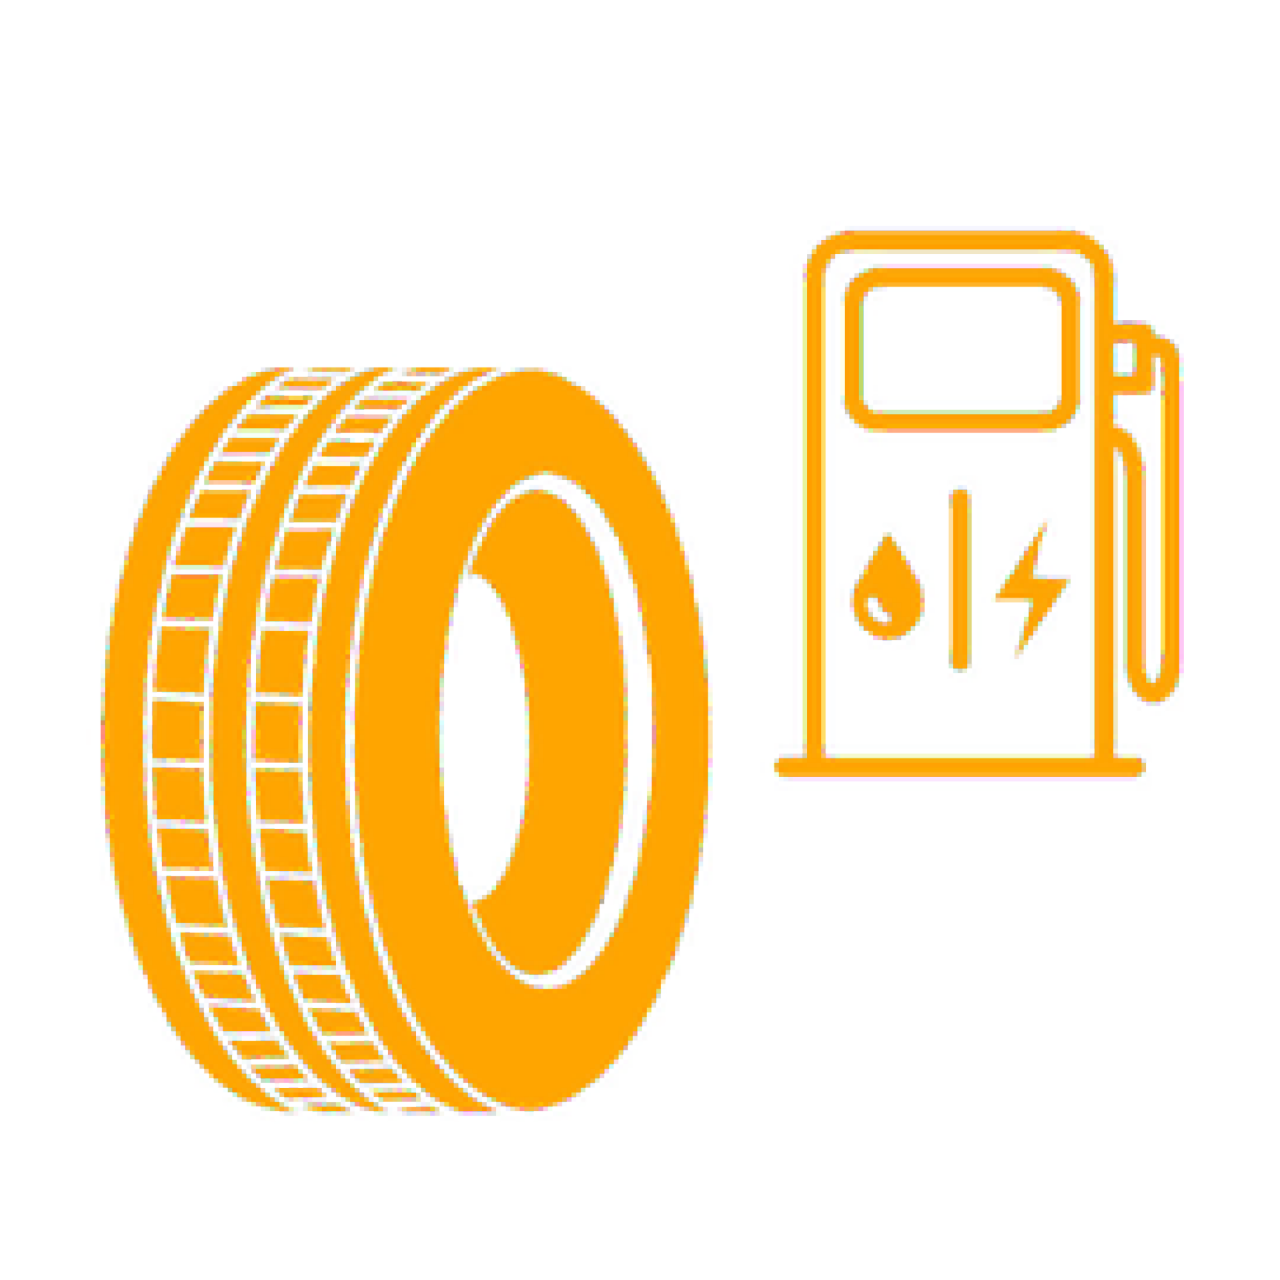 EU tire label